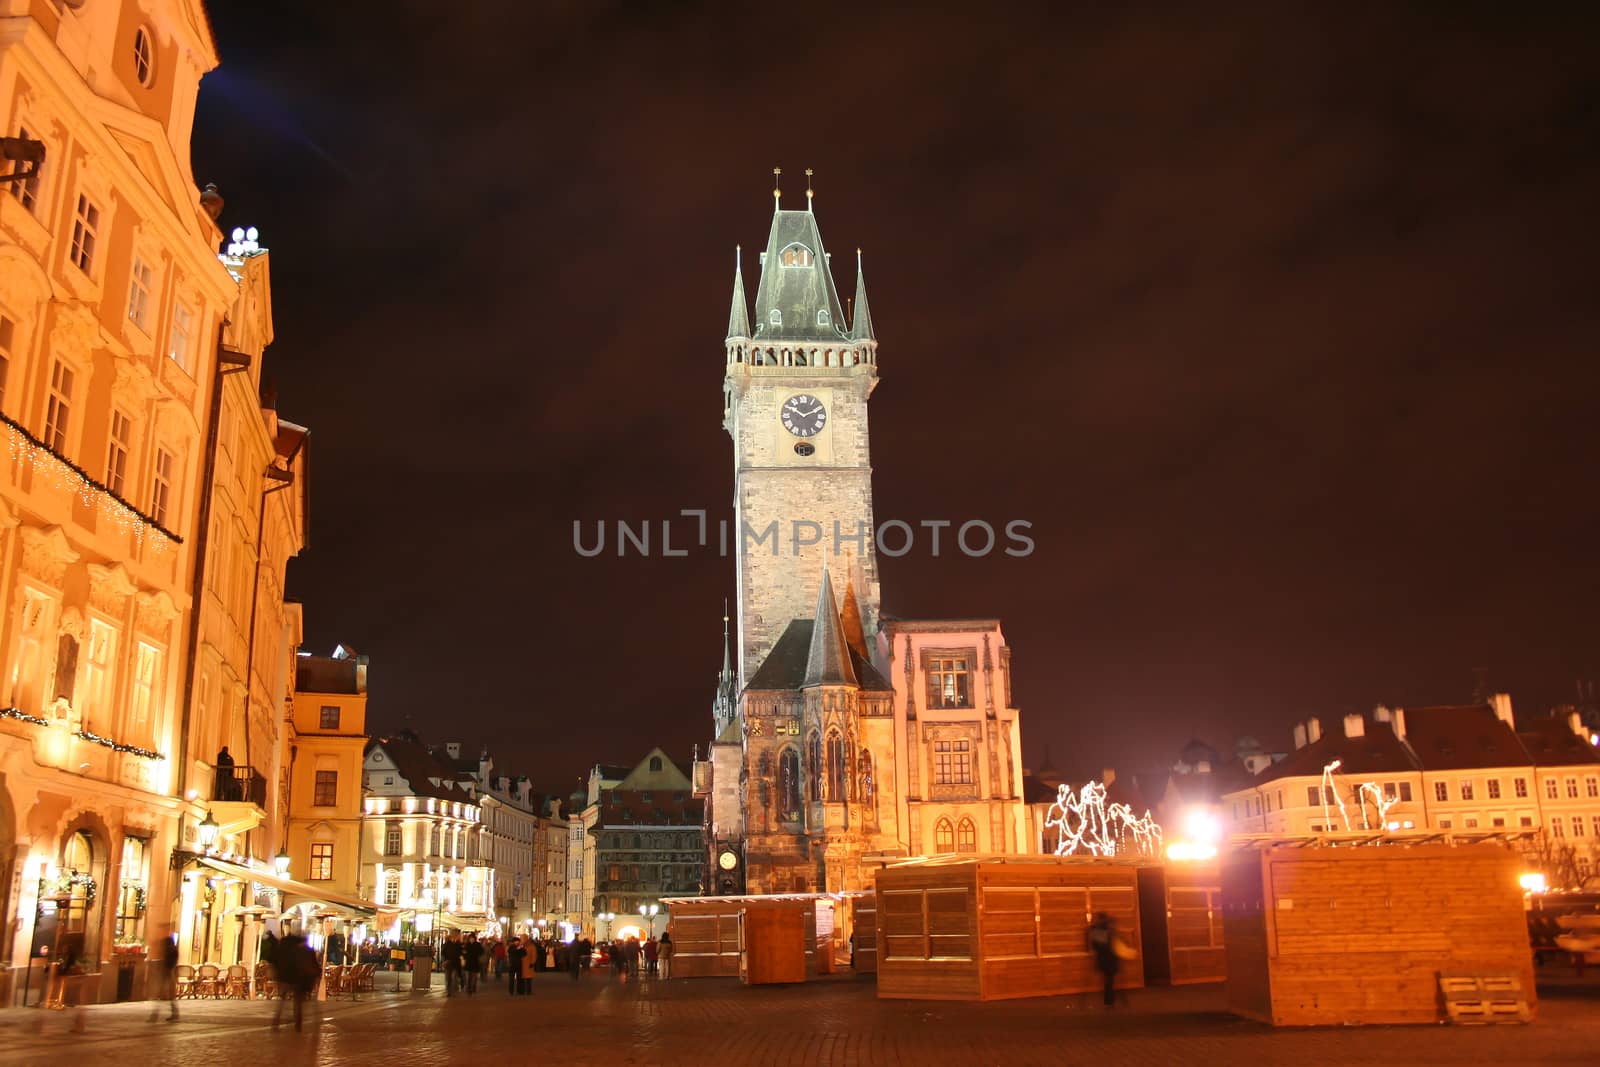 Staromestske Square in the city of Prague for Christmas by Vadimdem